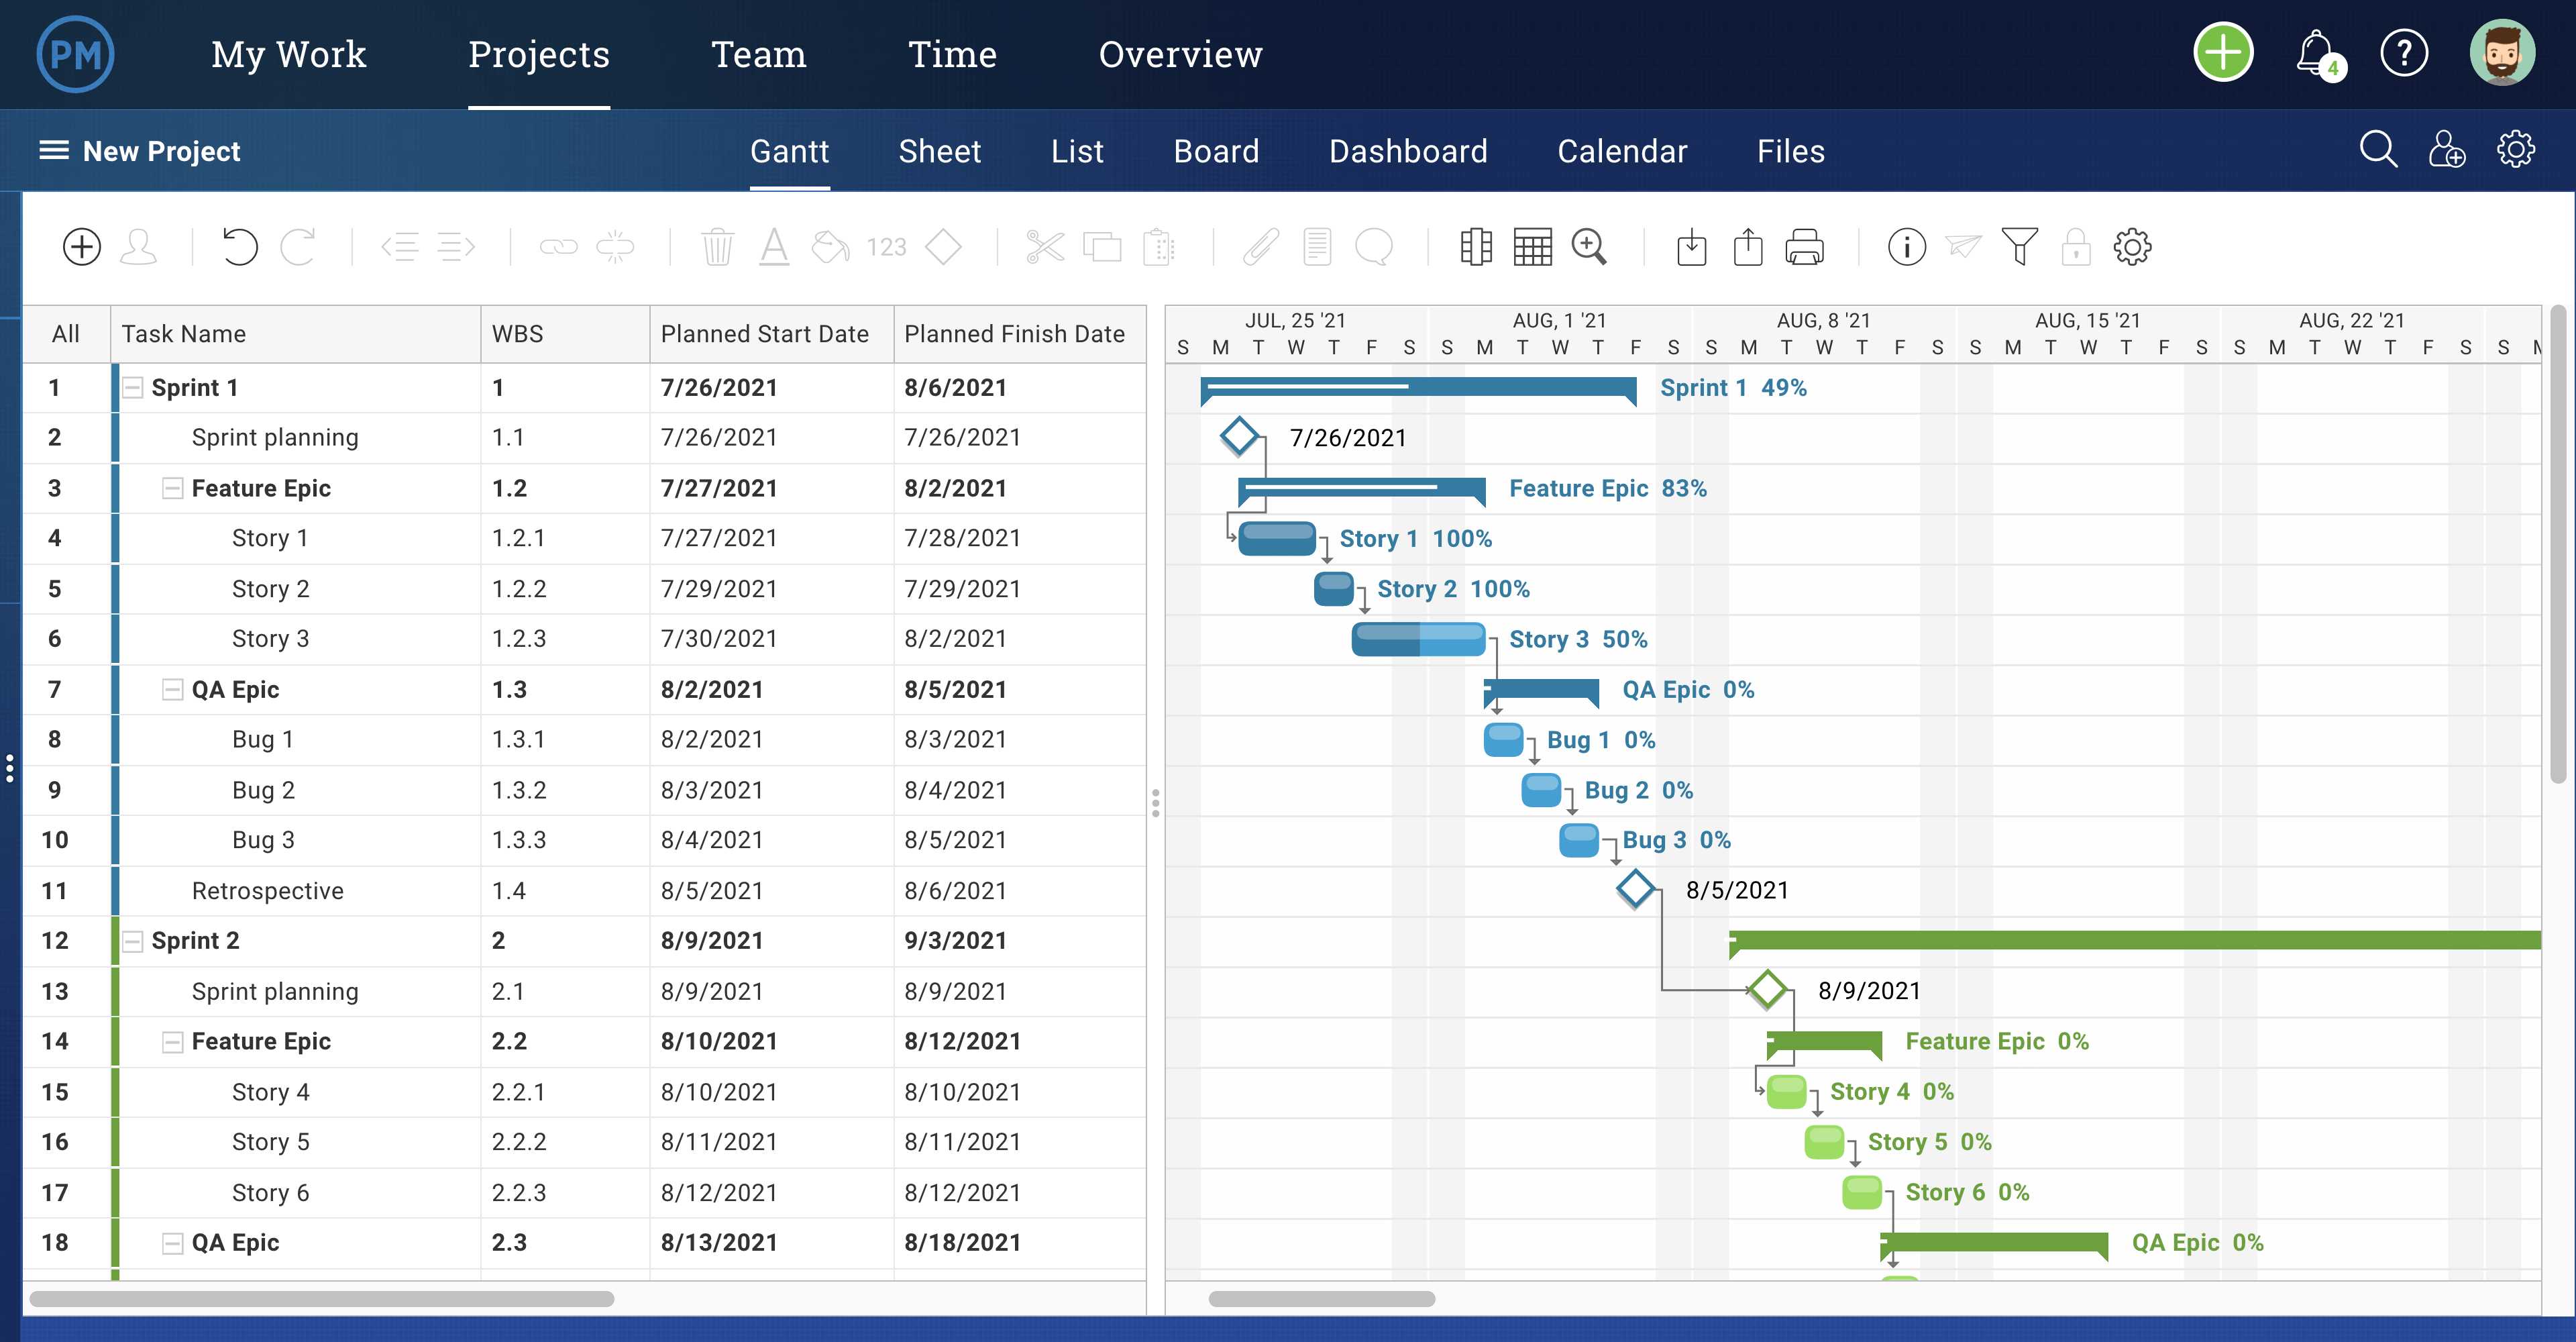 ProjectManager's Gantt chart project view